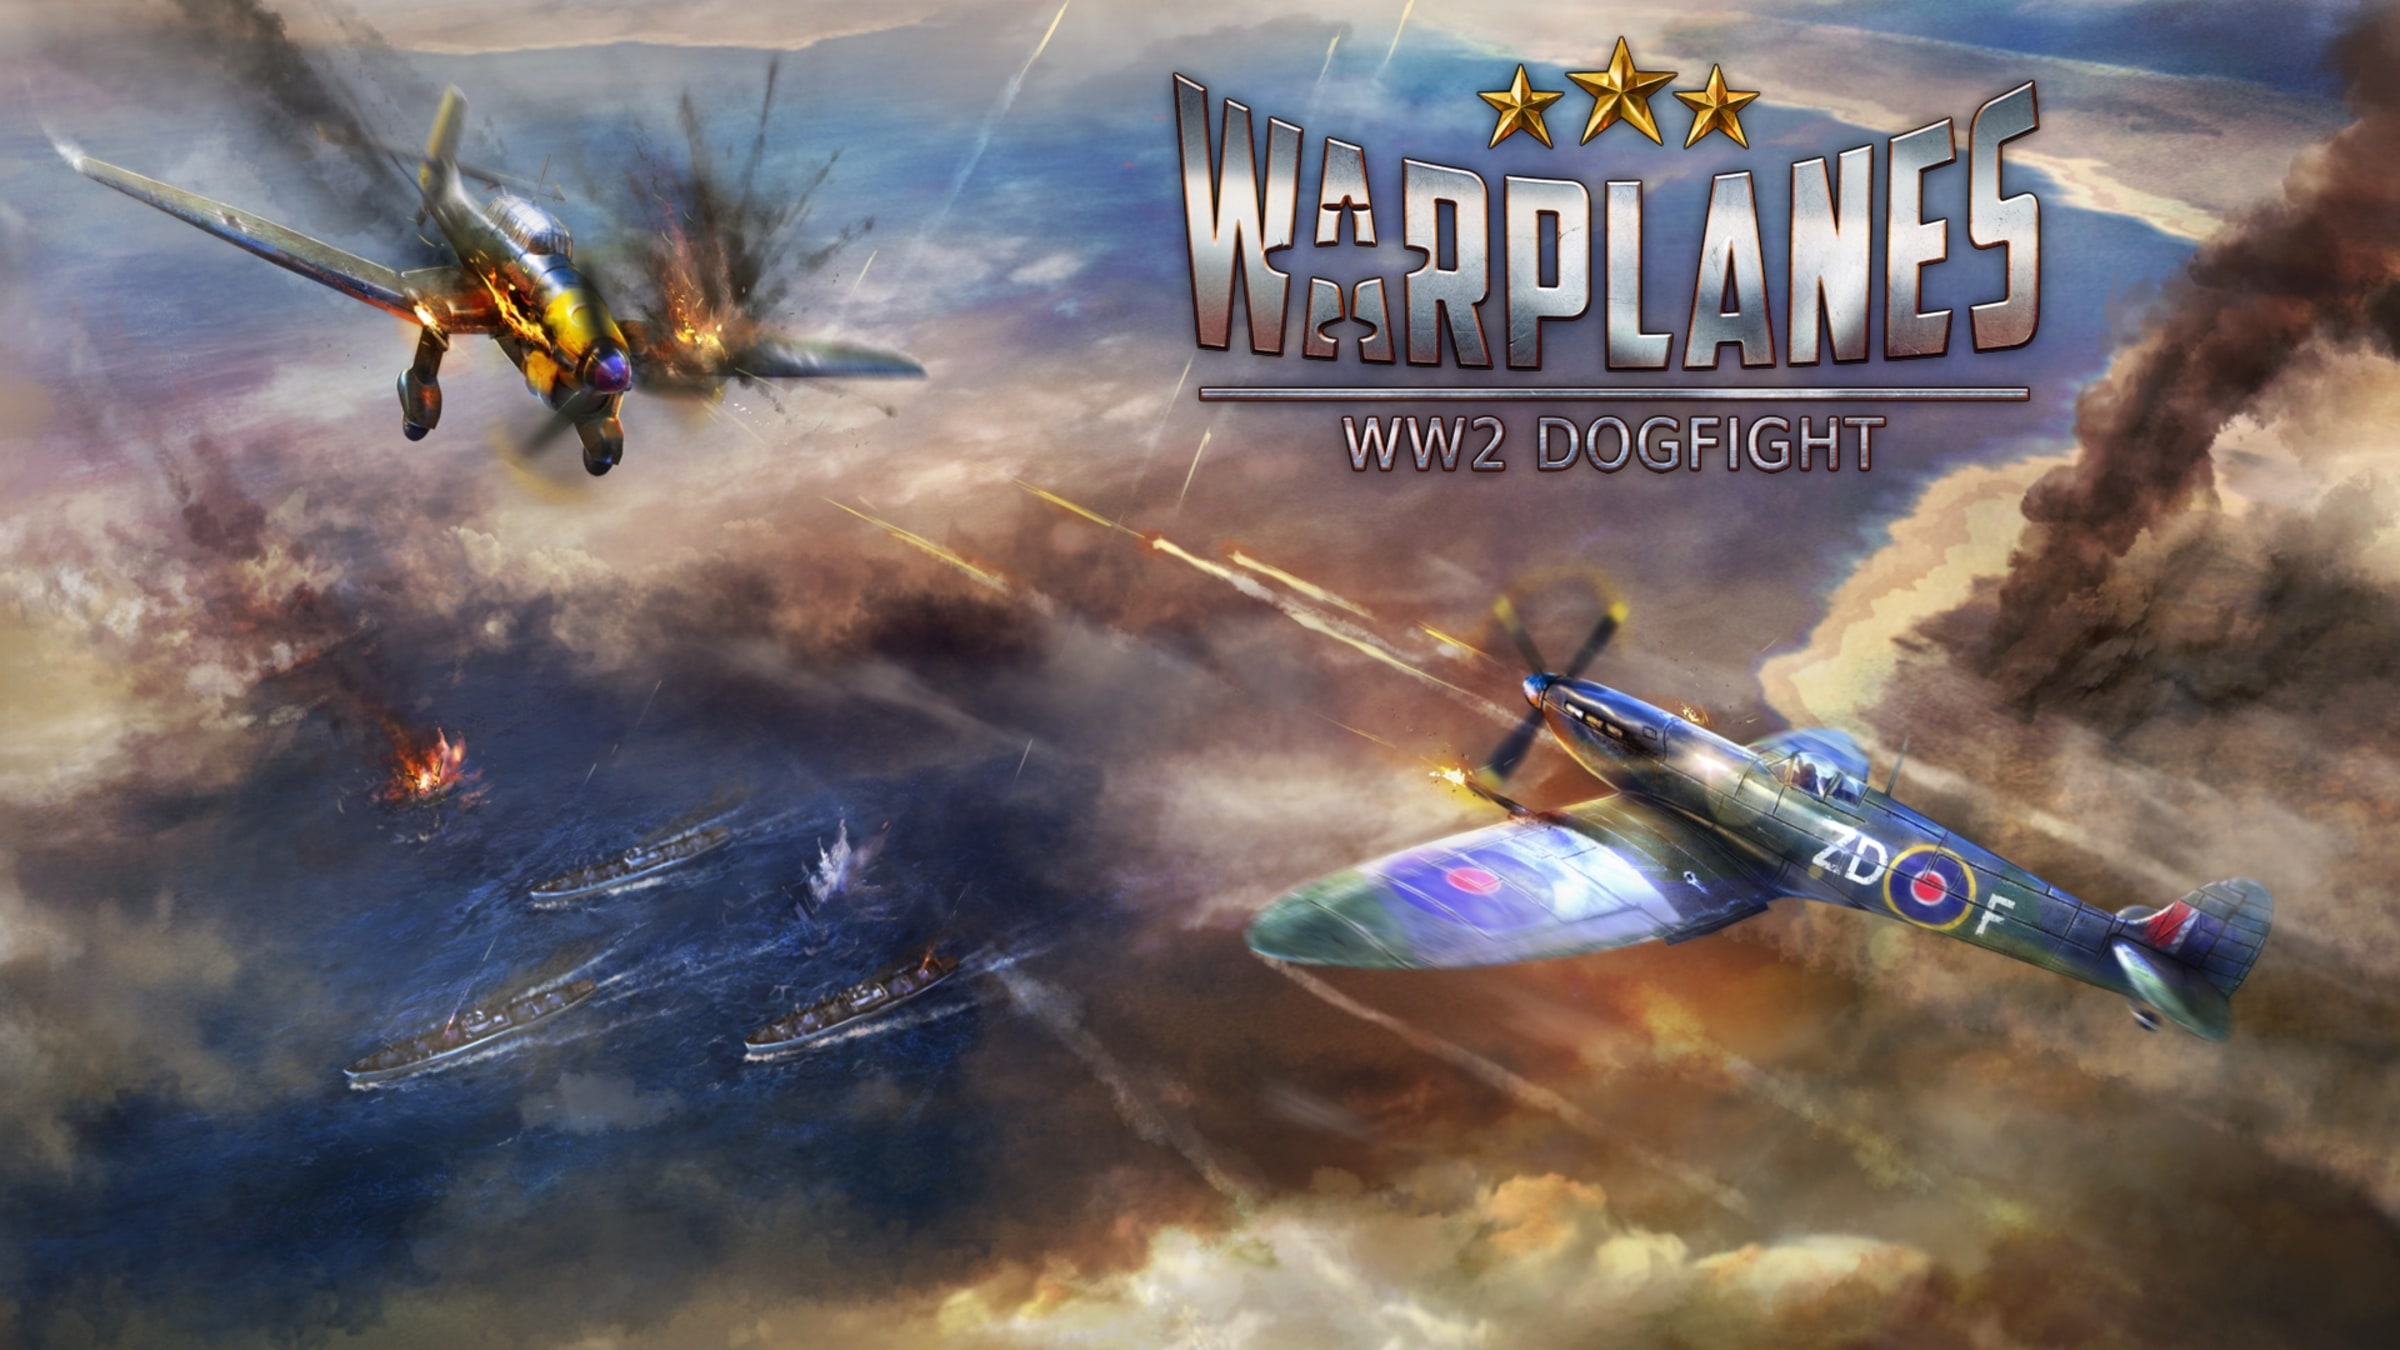 Europa het is mooi Stevig Warplanes: WW2 Dogfight for Nintendo Switch - Nintendo Official Site